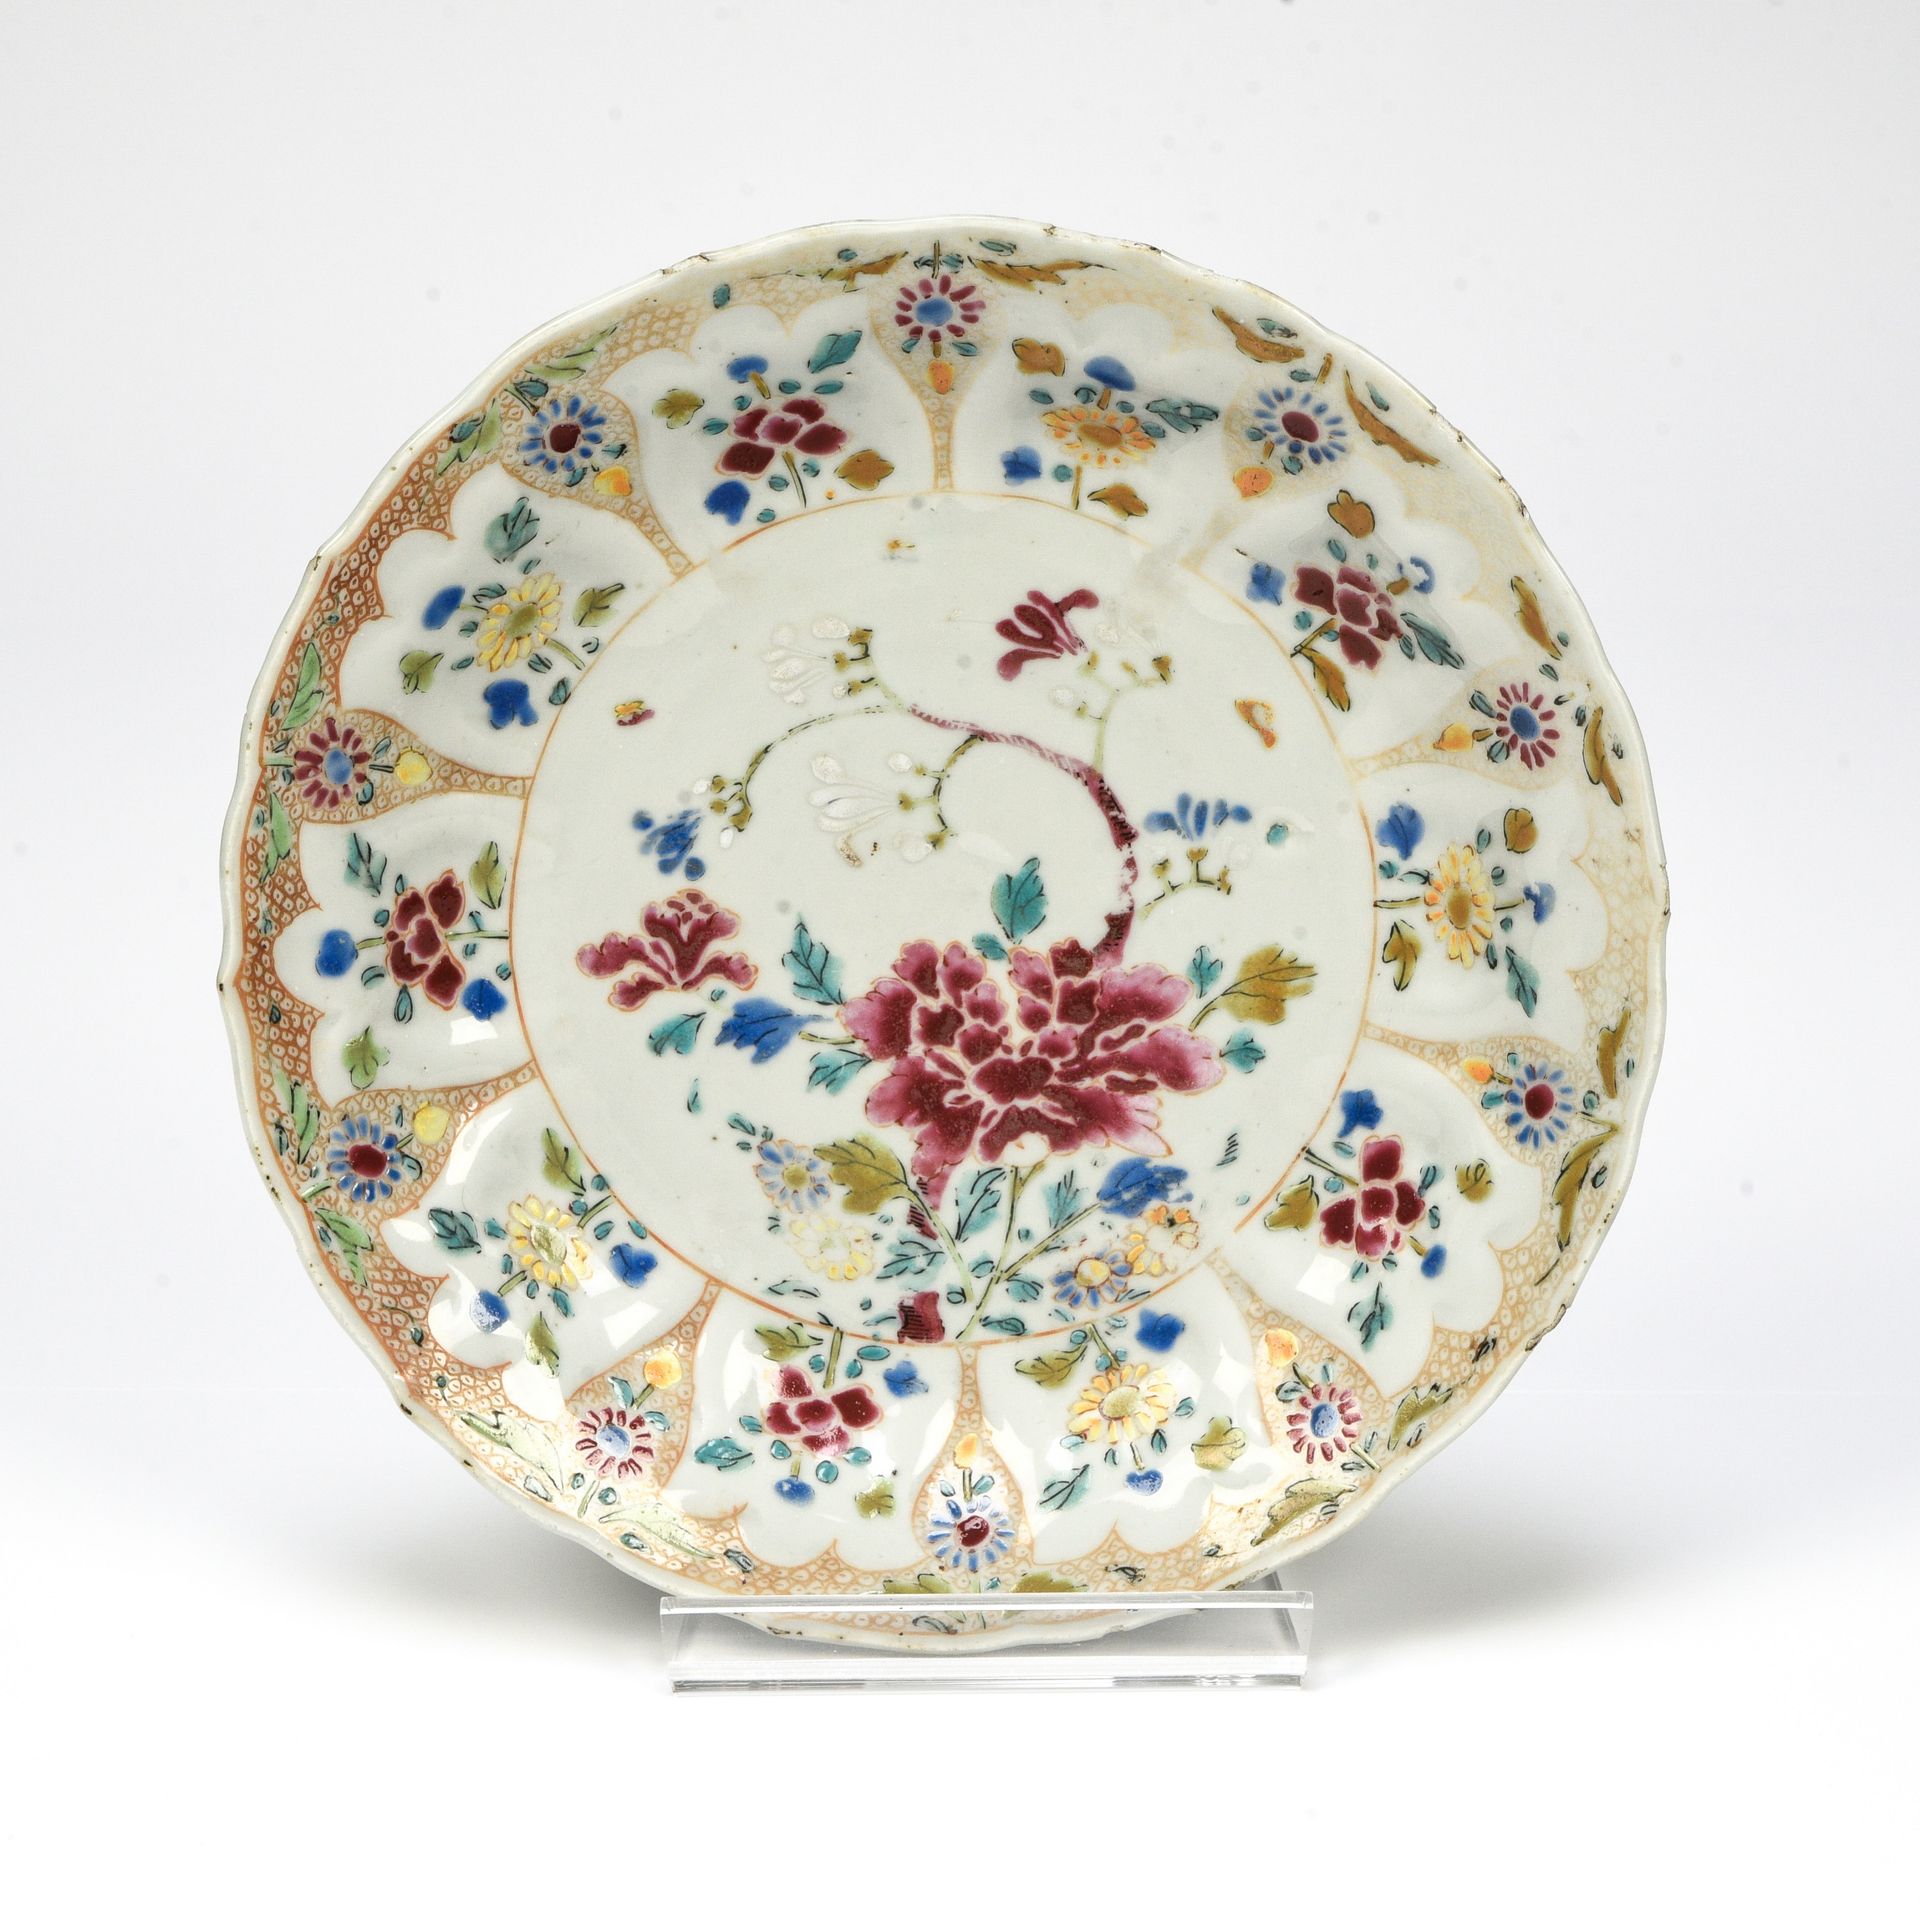 Null 中国，印度公司--雍正时期(1723 - 1735)

莲花花瓣的汤盘



中间是一枝牡丹，翅膀上装饰着荷花瓣。



专家：Cabinet Por&hellip;